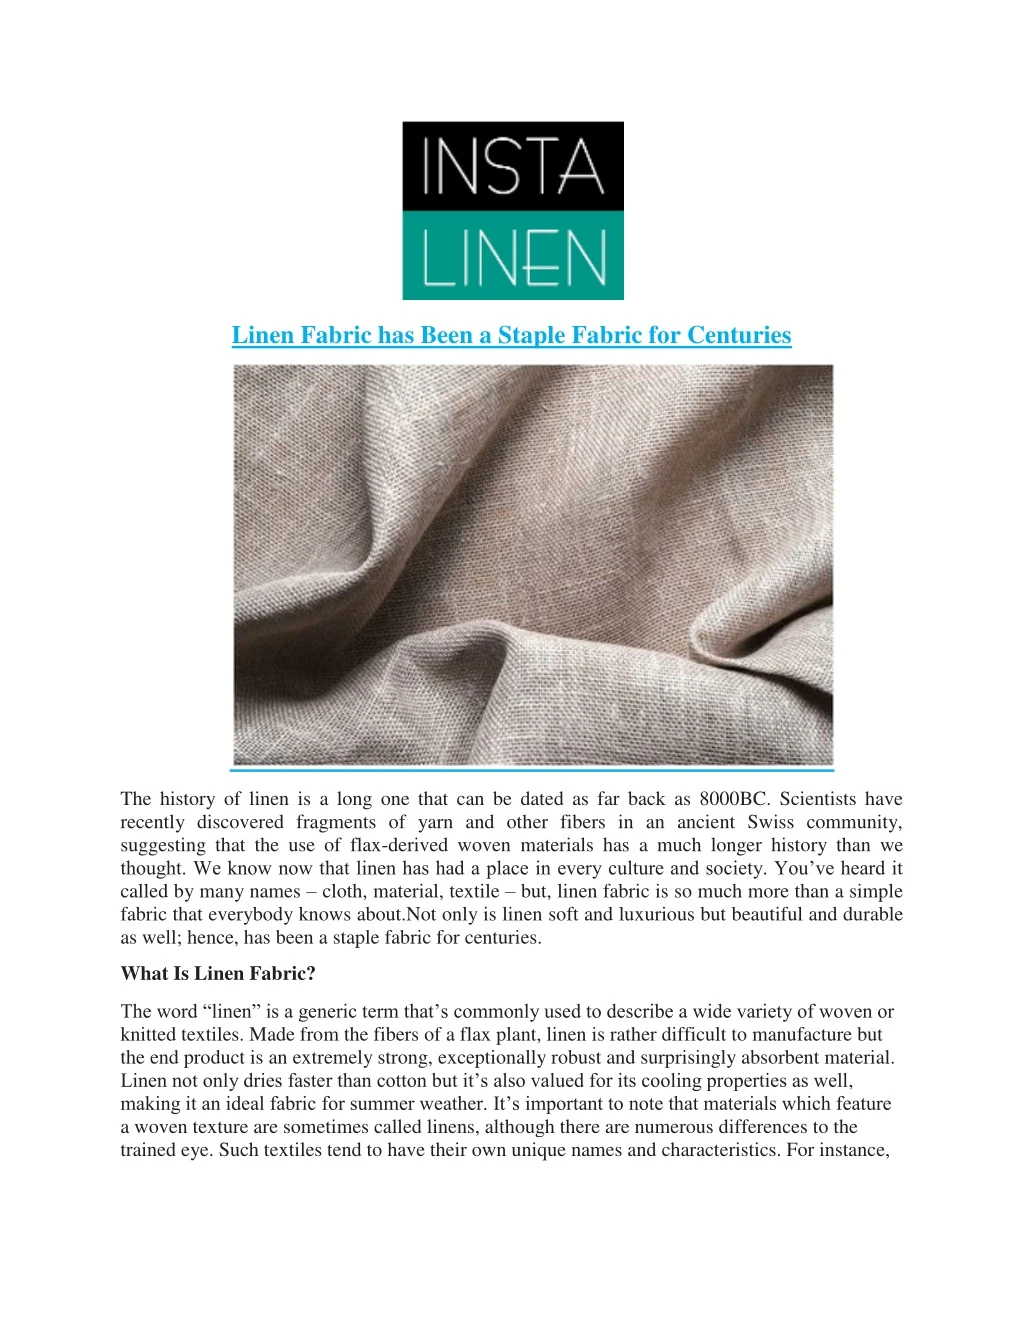 linen fabric has been a staple fabric